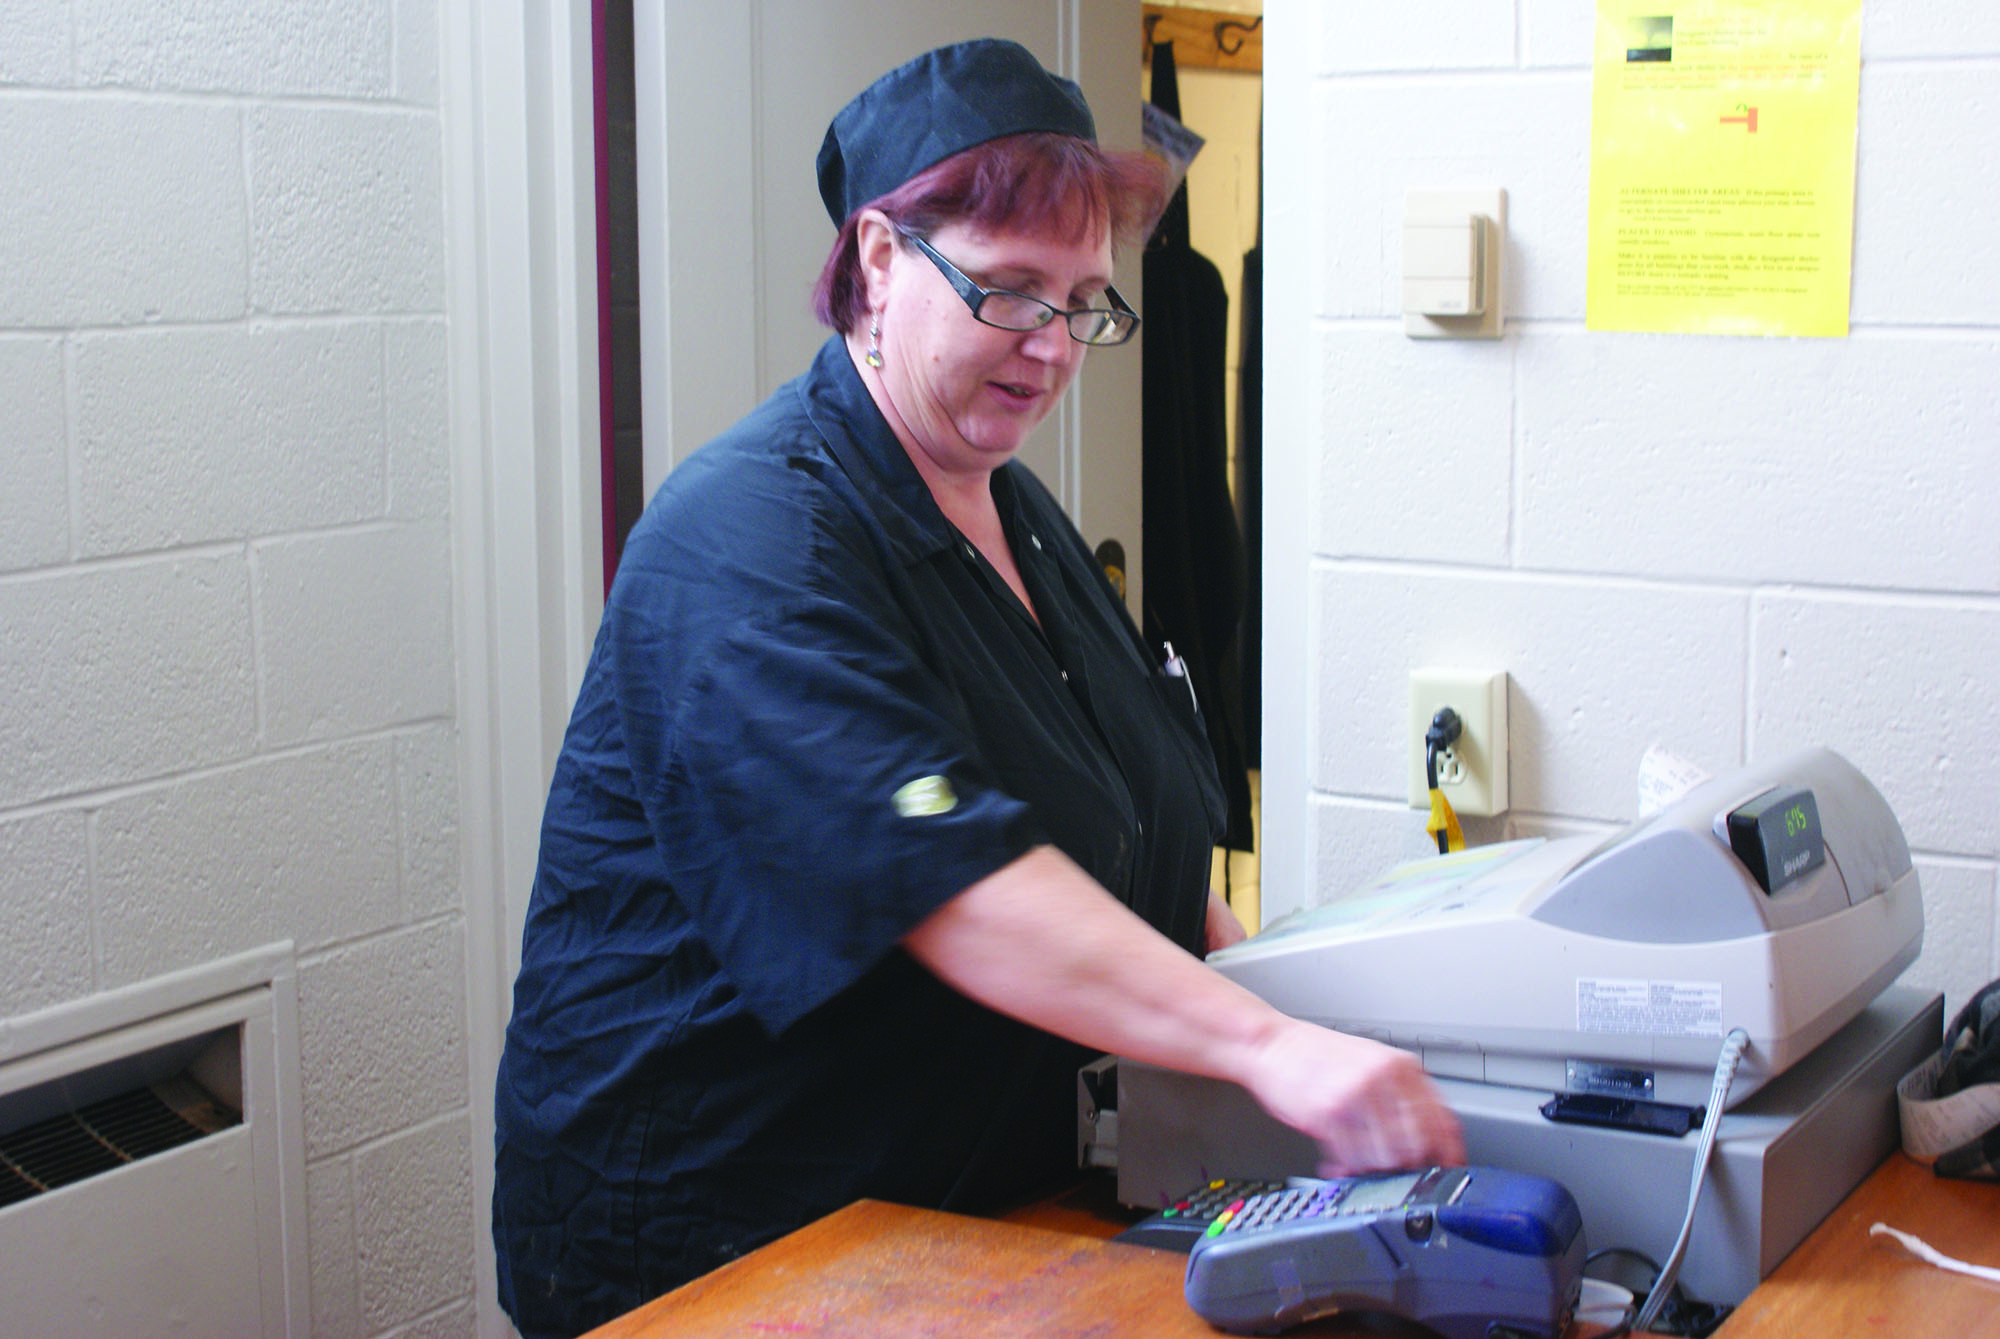 Wearing the black AVI Fresh uniform, Jodi Kuhlman swipes a card at the Leaf Raker cafe cash register